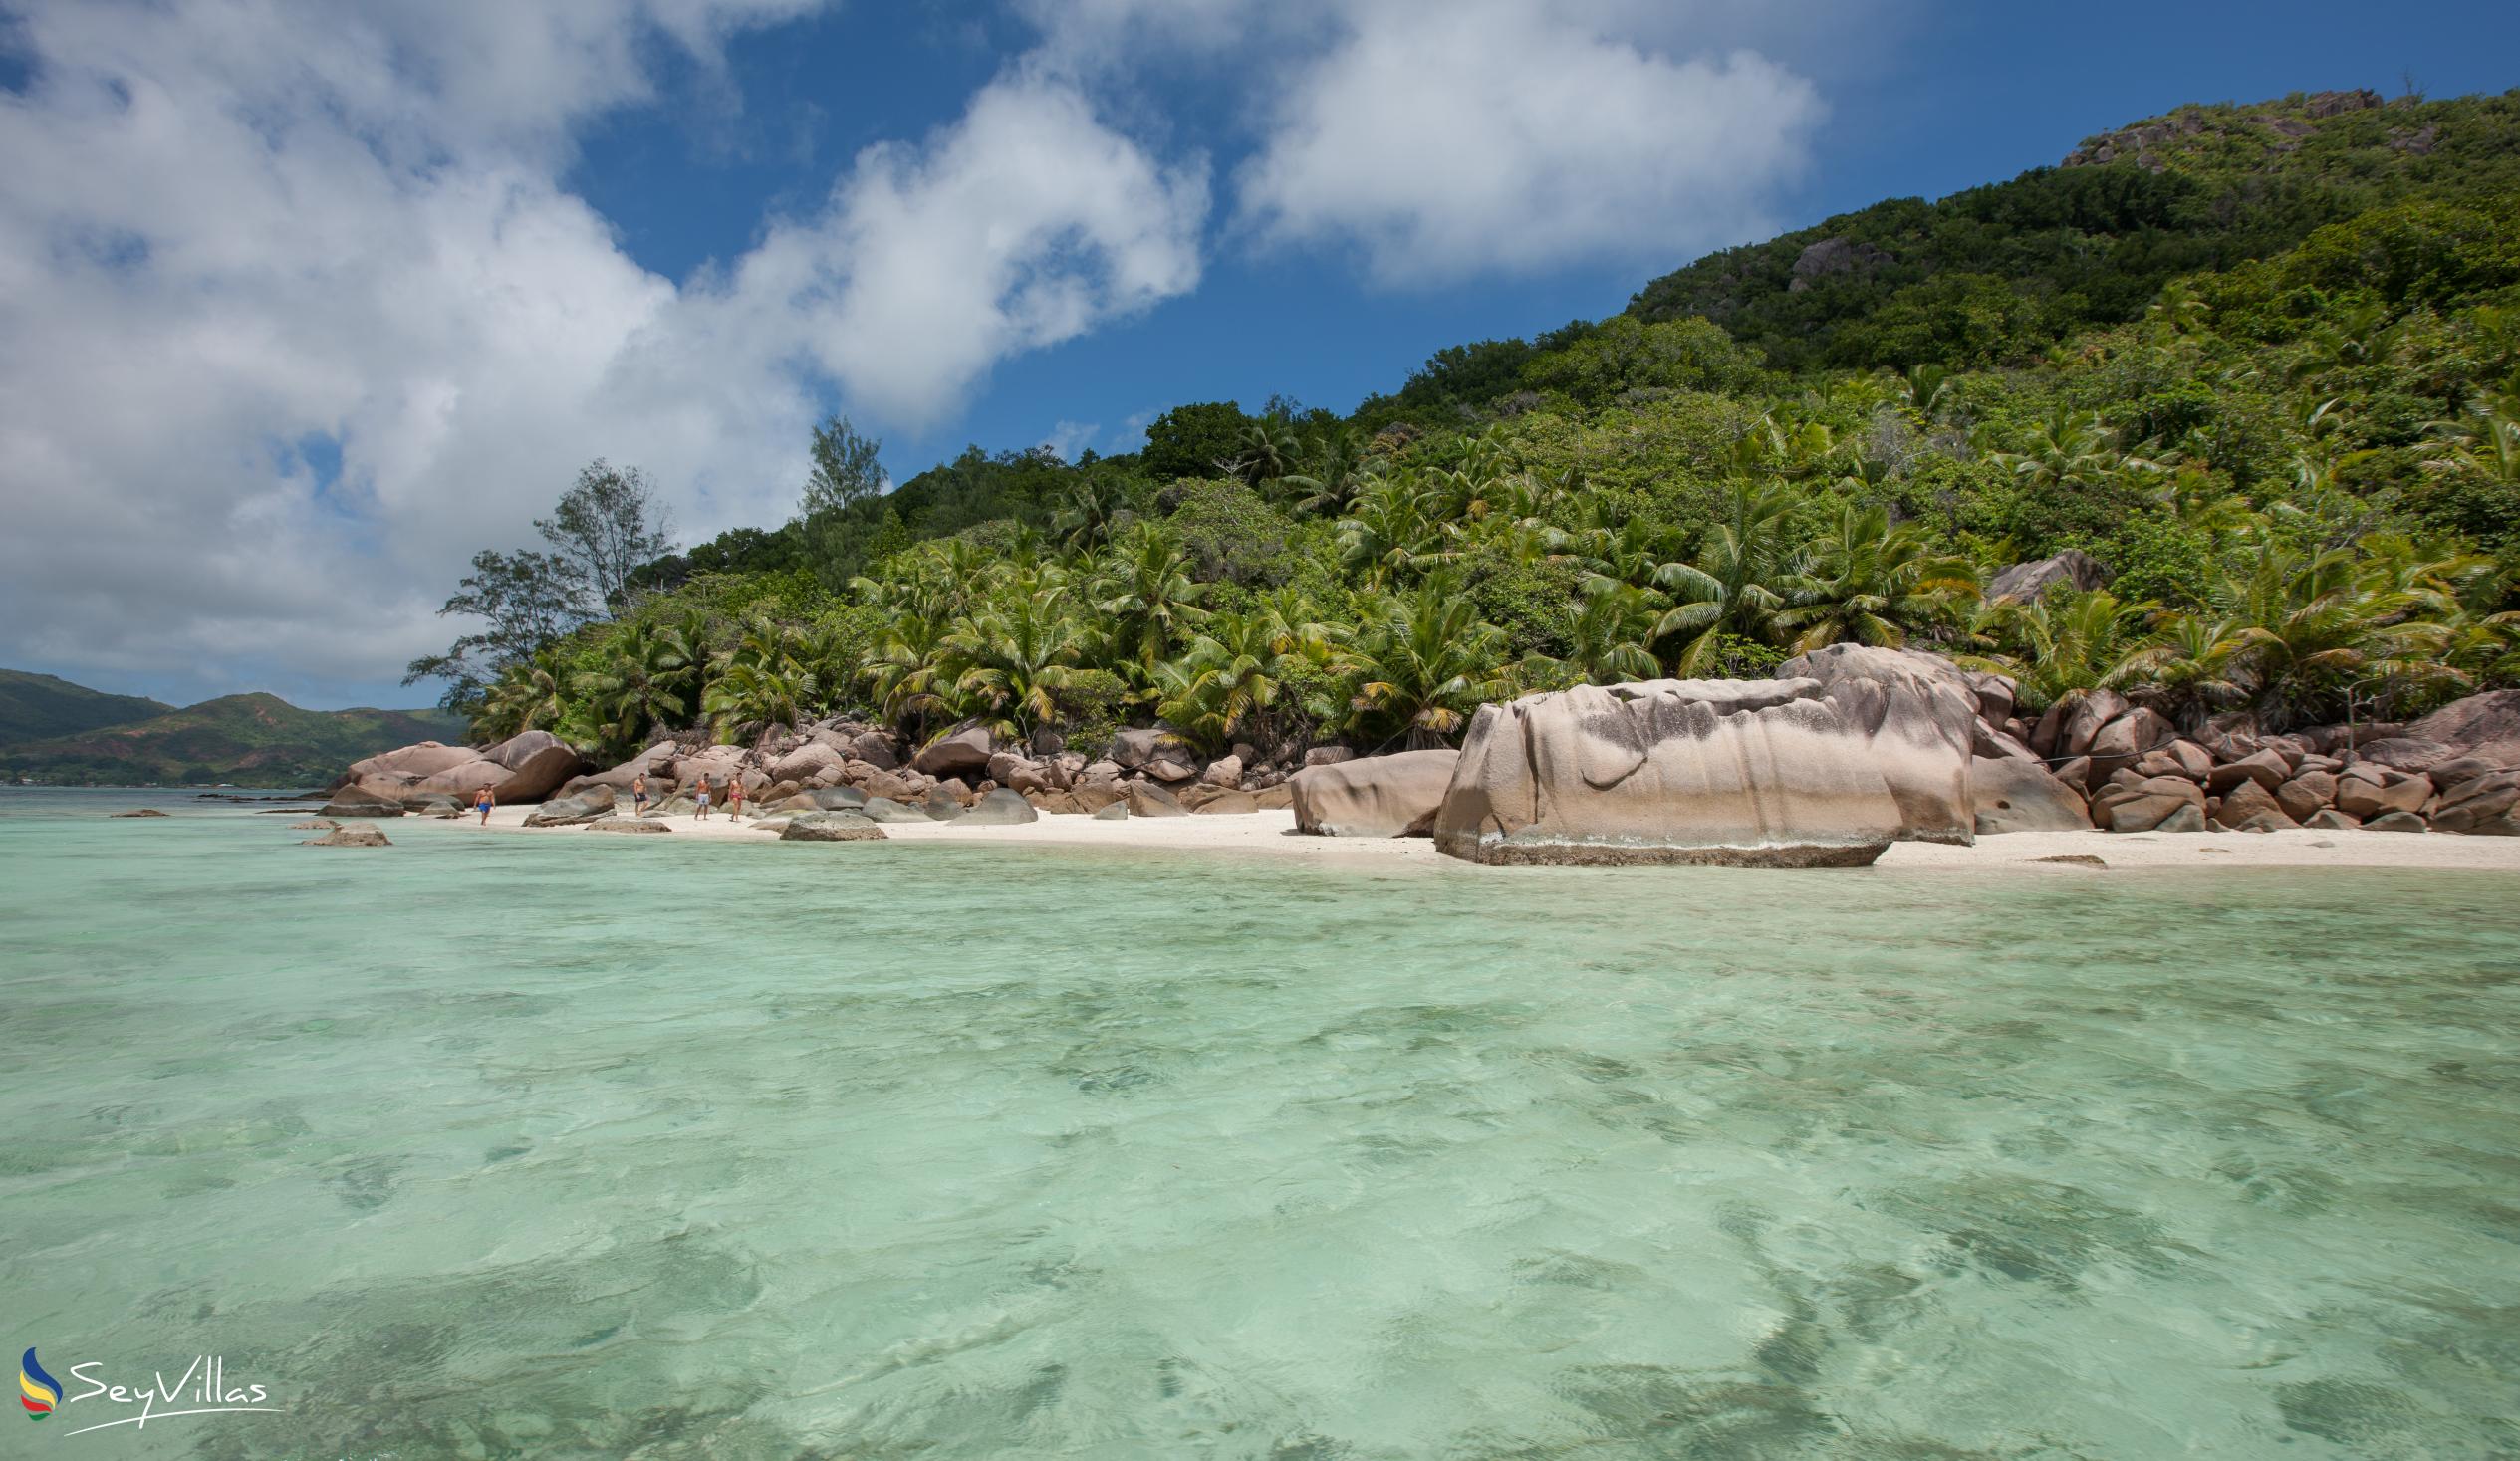 Photo 9: Anse la Farine - Praslin (Seychelles)